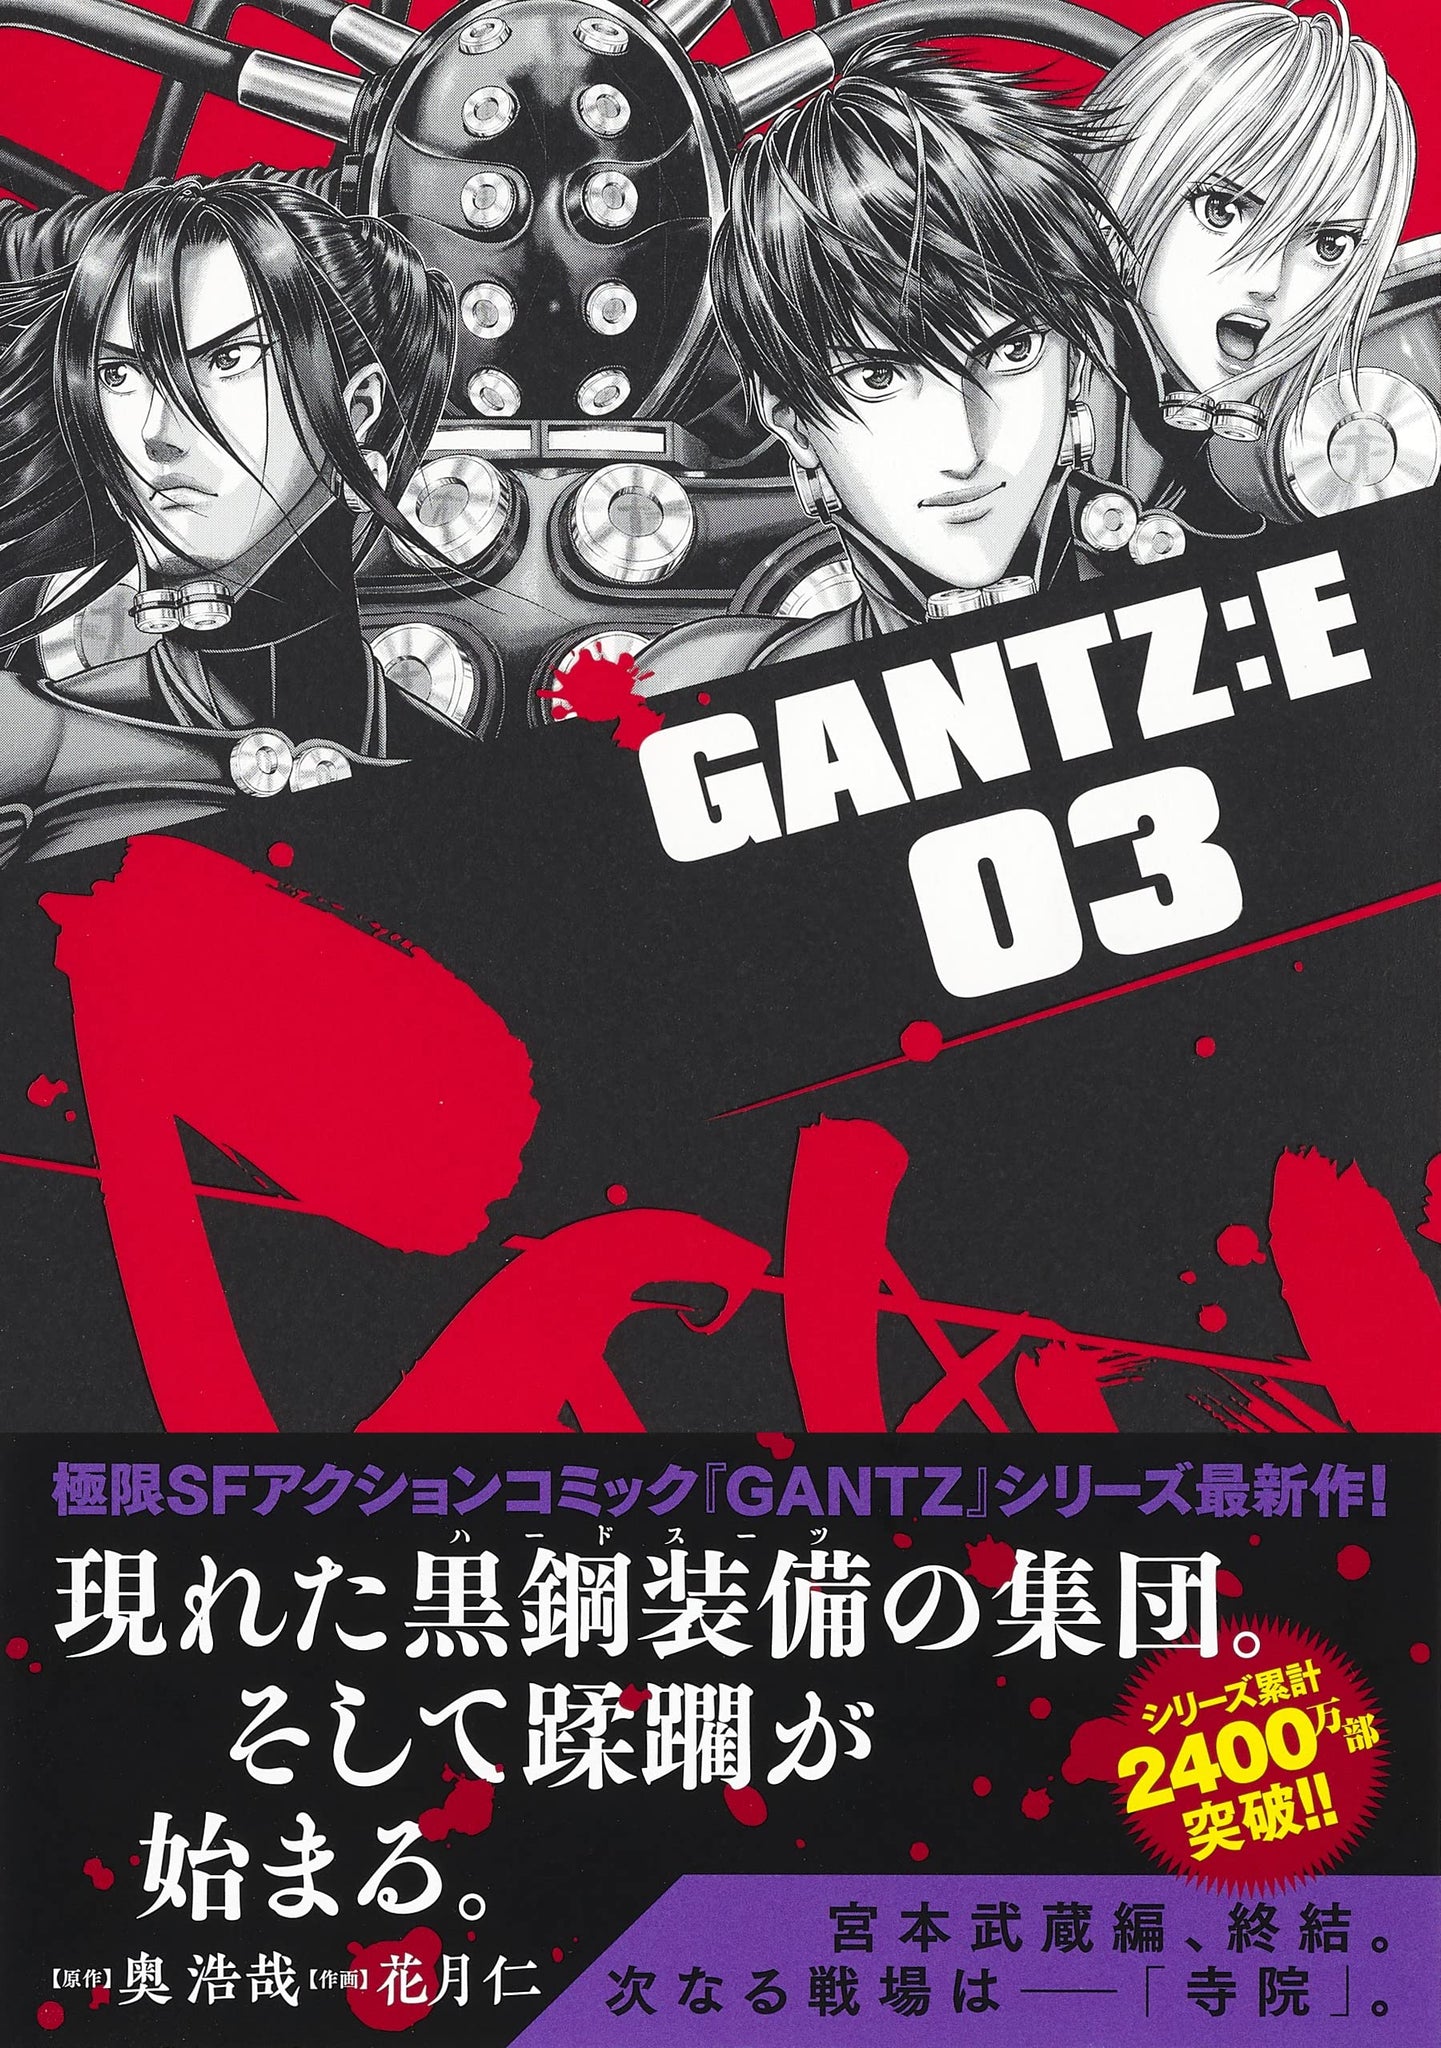 GANTZ 全37巻 GANTZ E 1-3巻 - 全巻セット